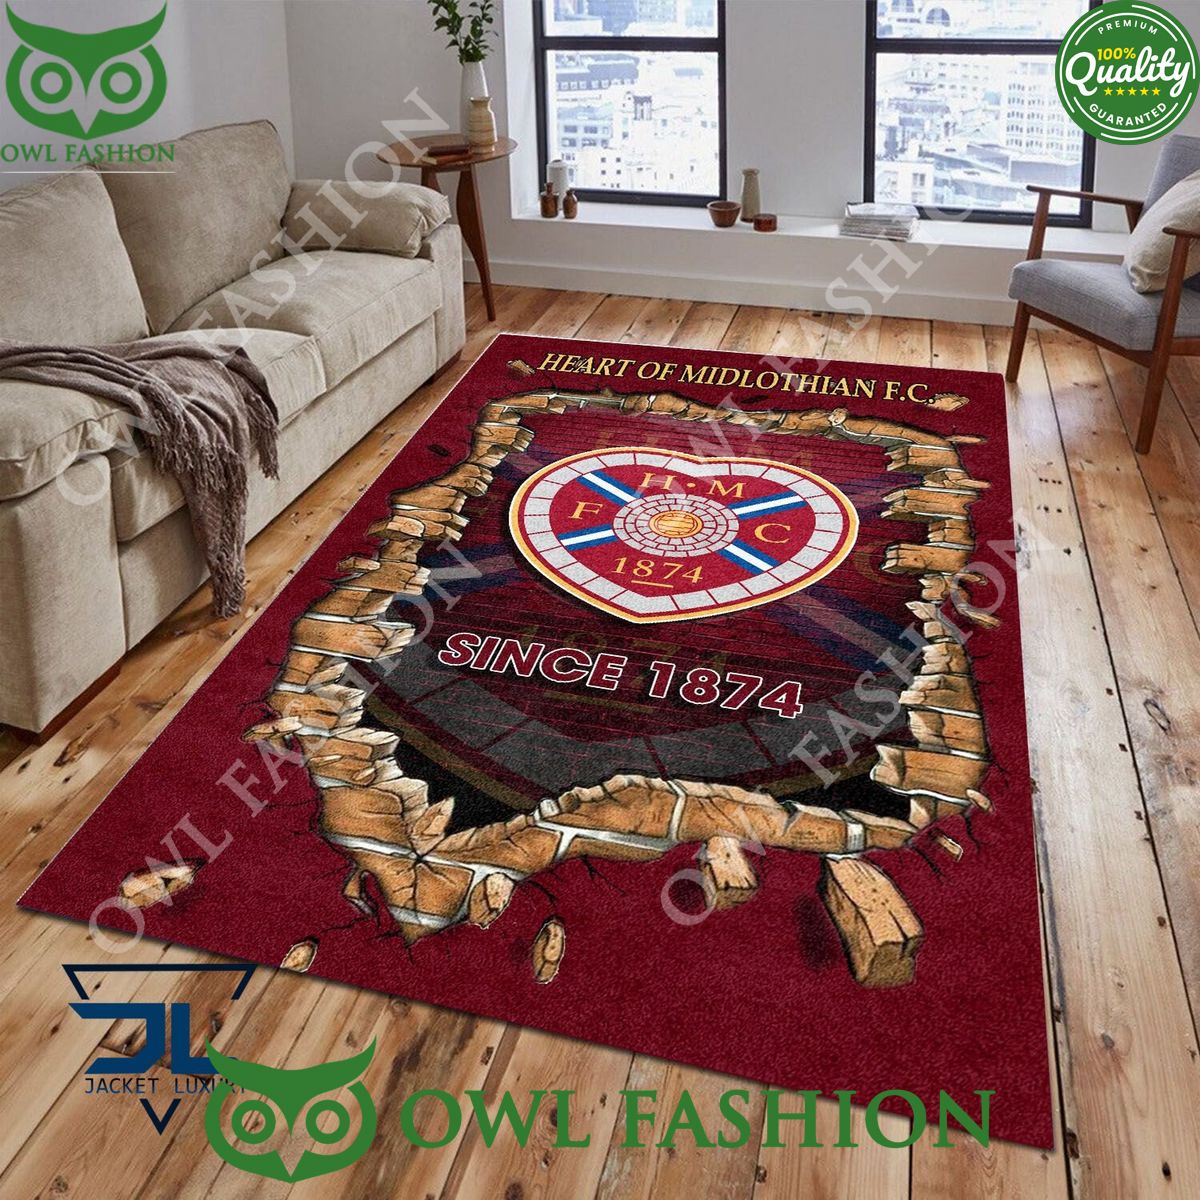 Heart of Midlothian F.C. 1783 Scottish Broken Wall Living Room Carpet